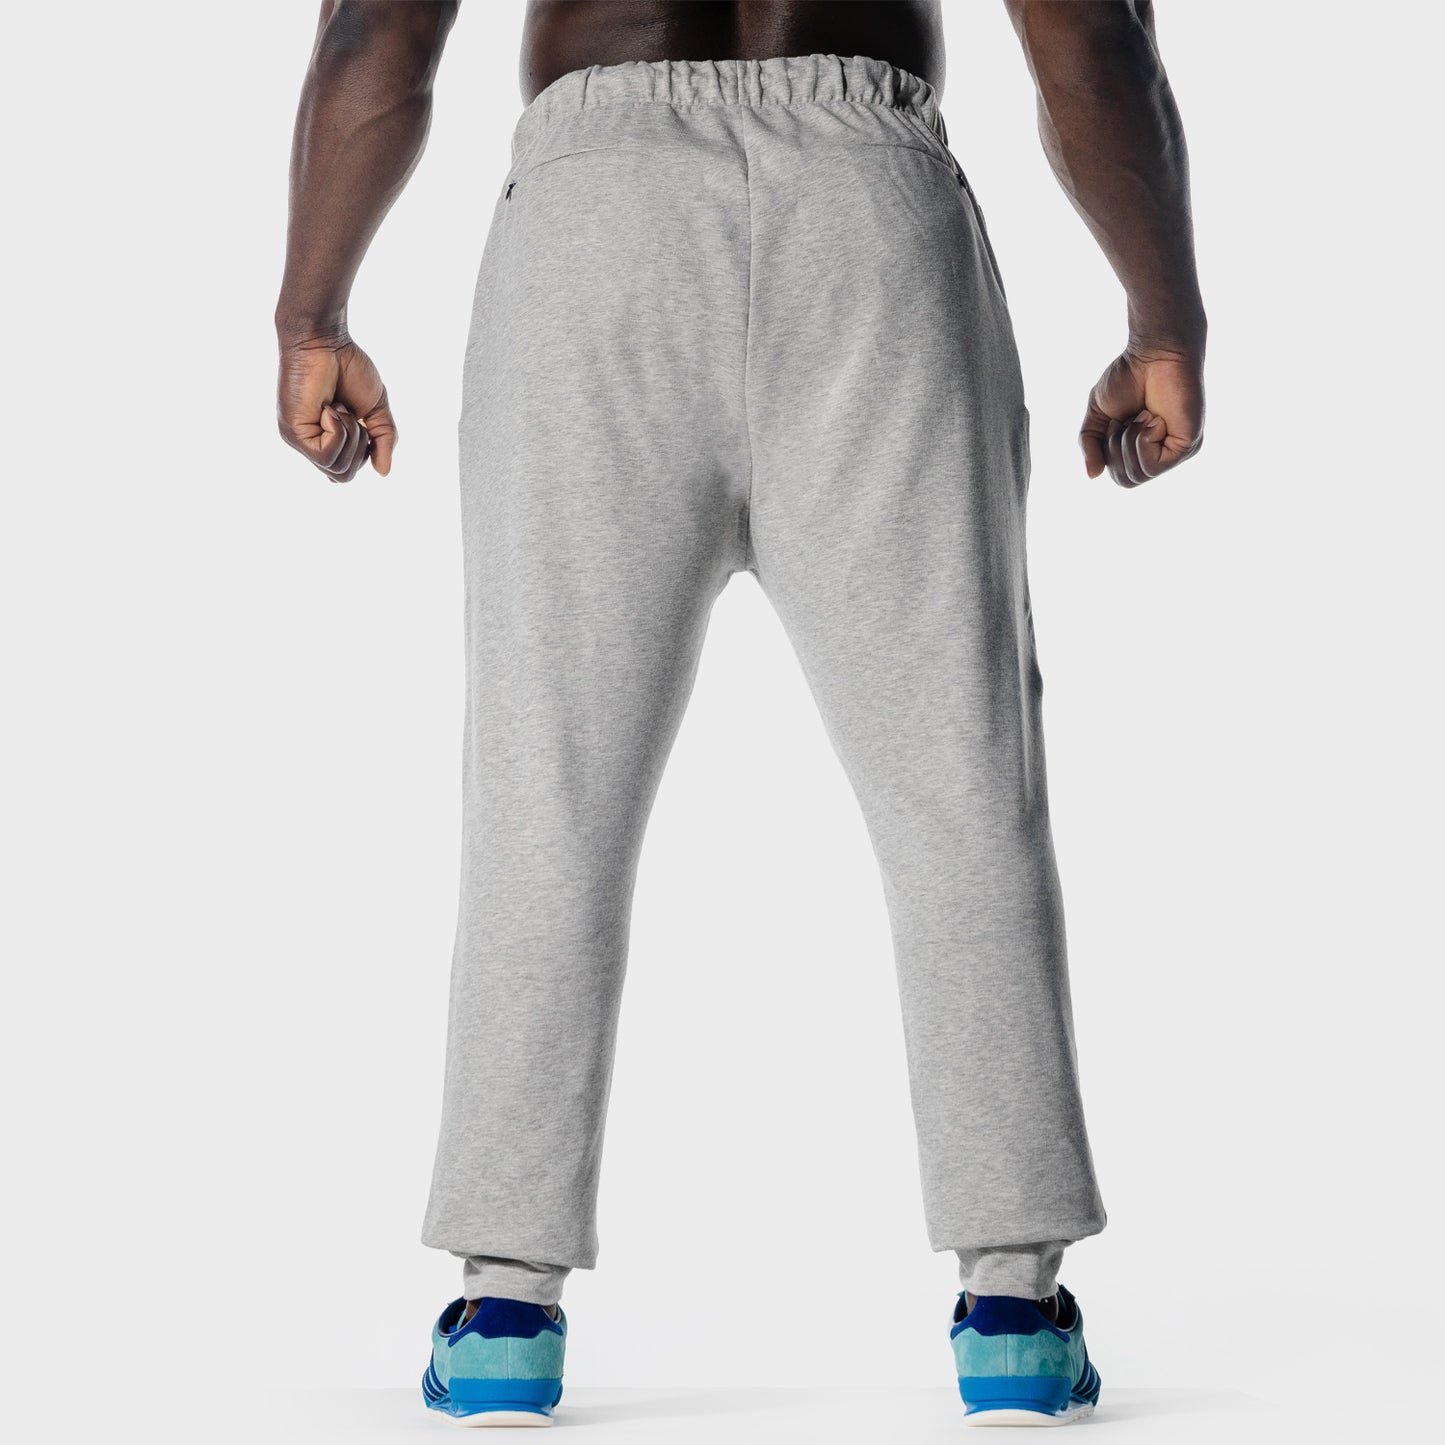 squatwolf-gym-pants-golden-era-joggers-light-grey-marl-workout-clothes-for-men